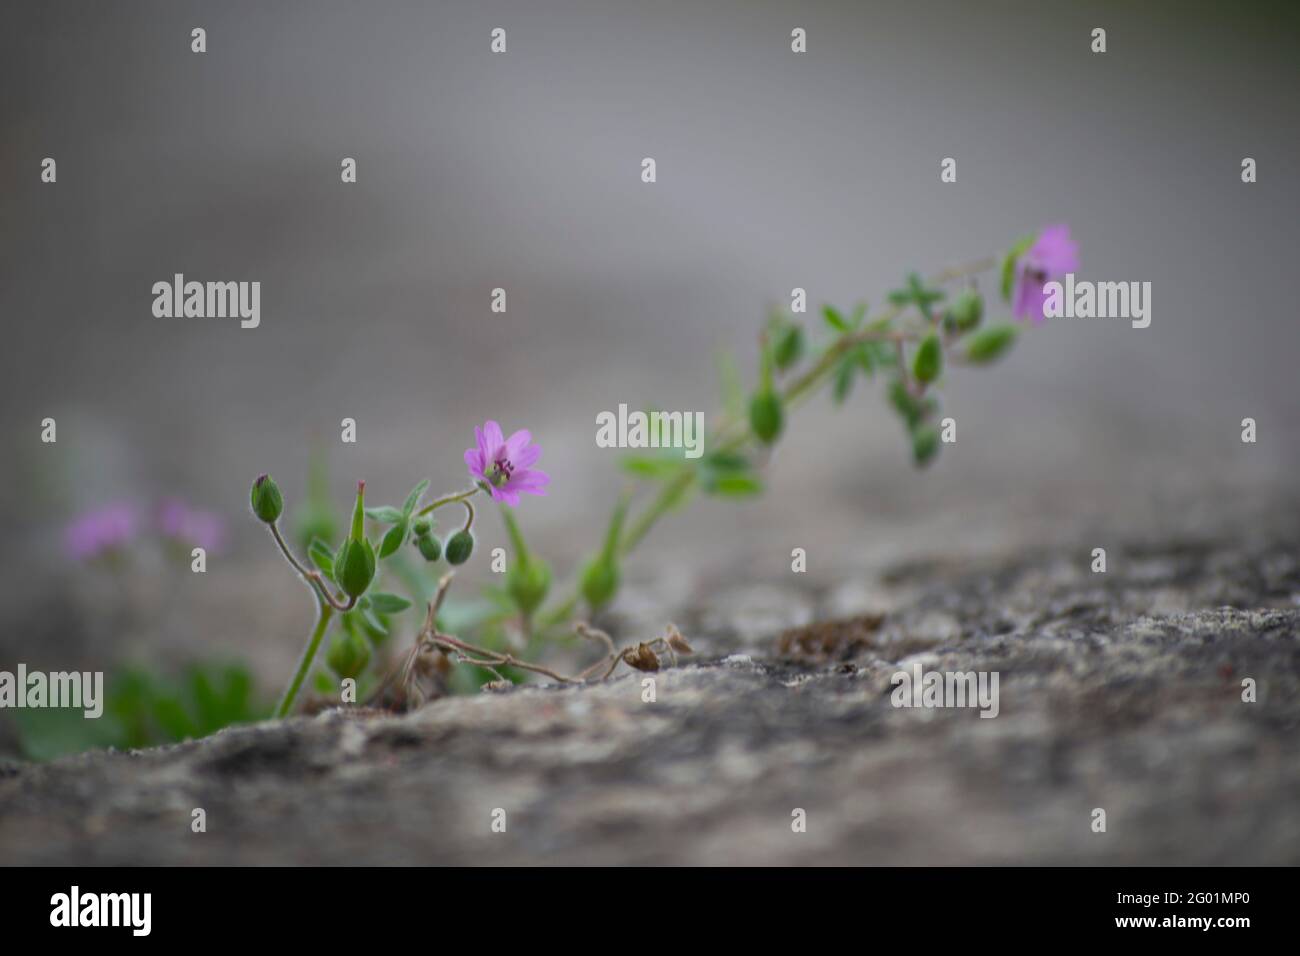 geranium wildflowers on a concrete wall. Selective focus Stock Photo